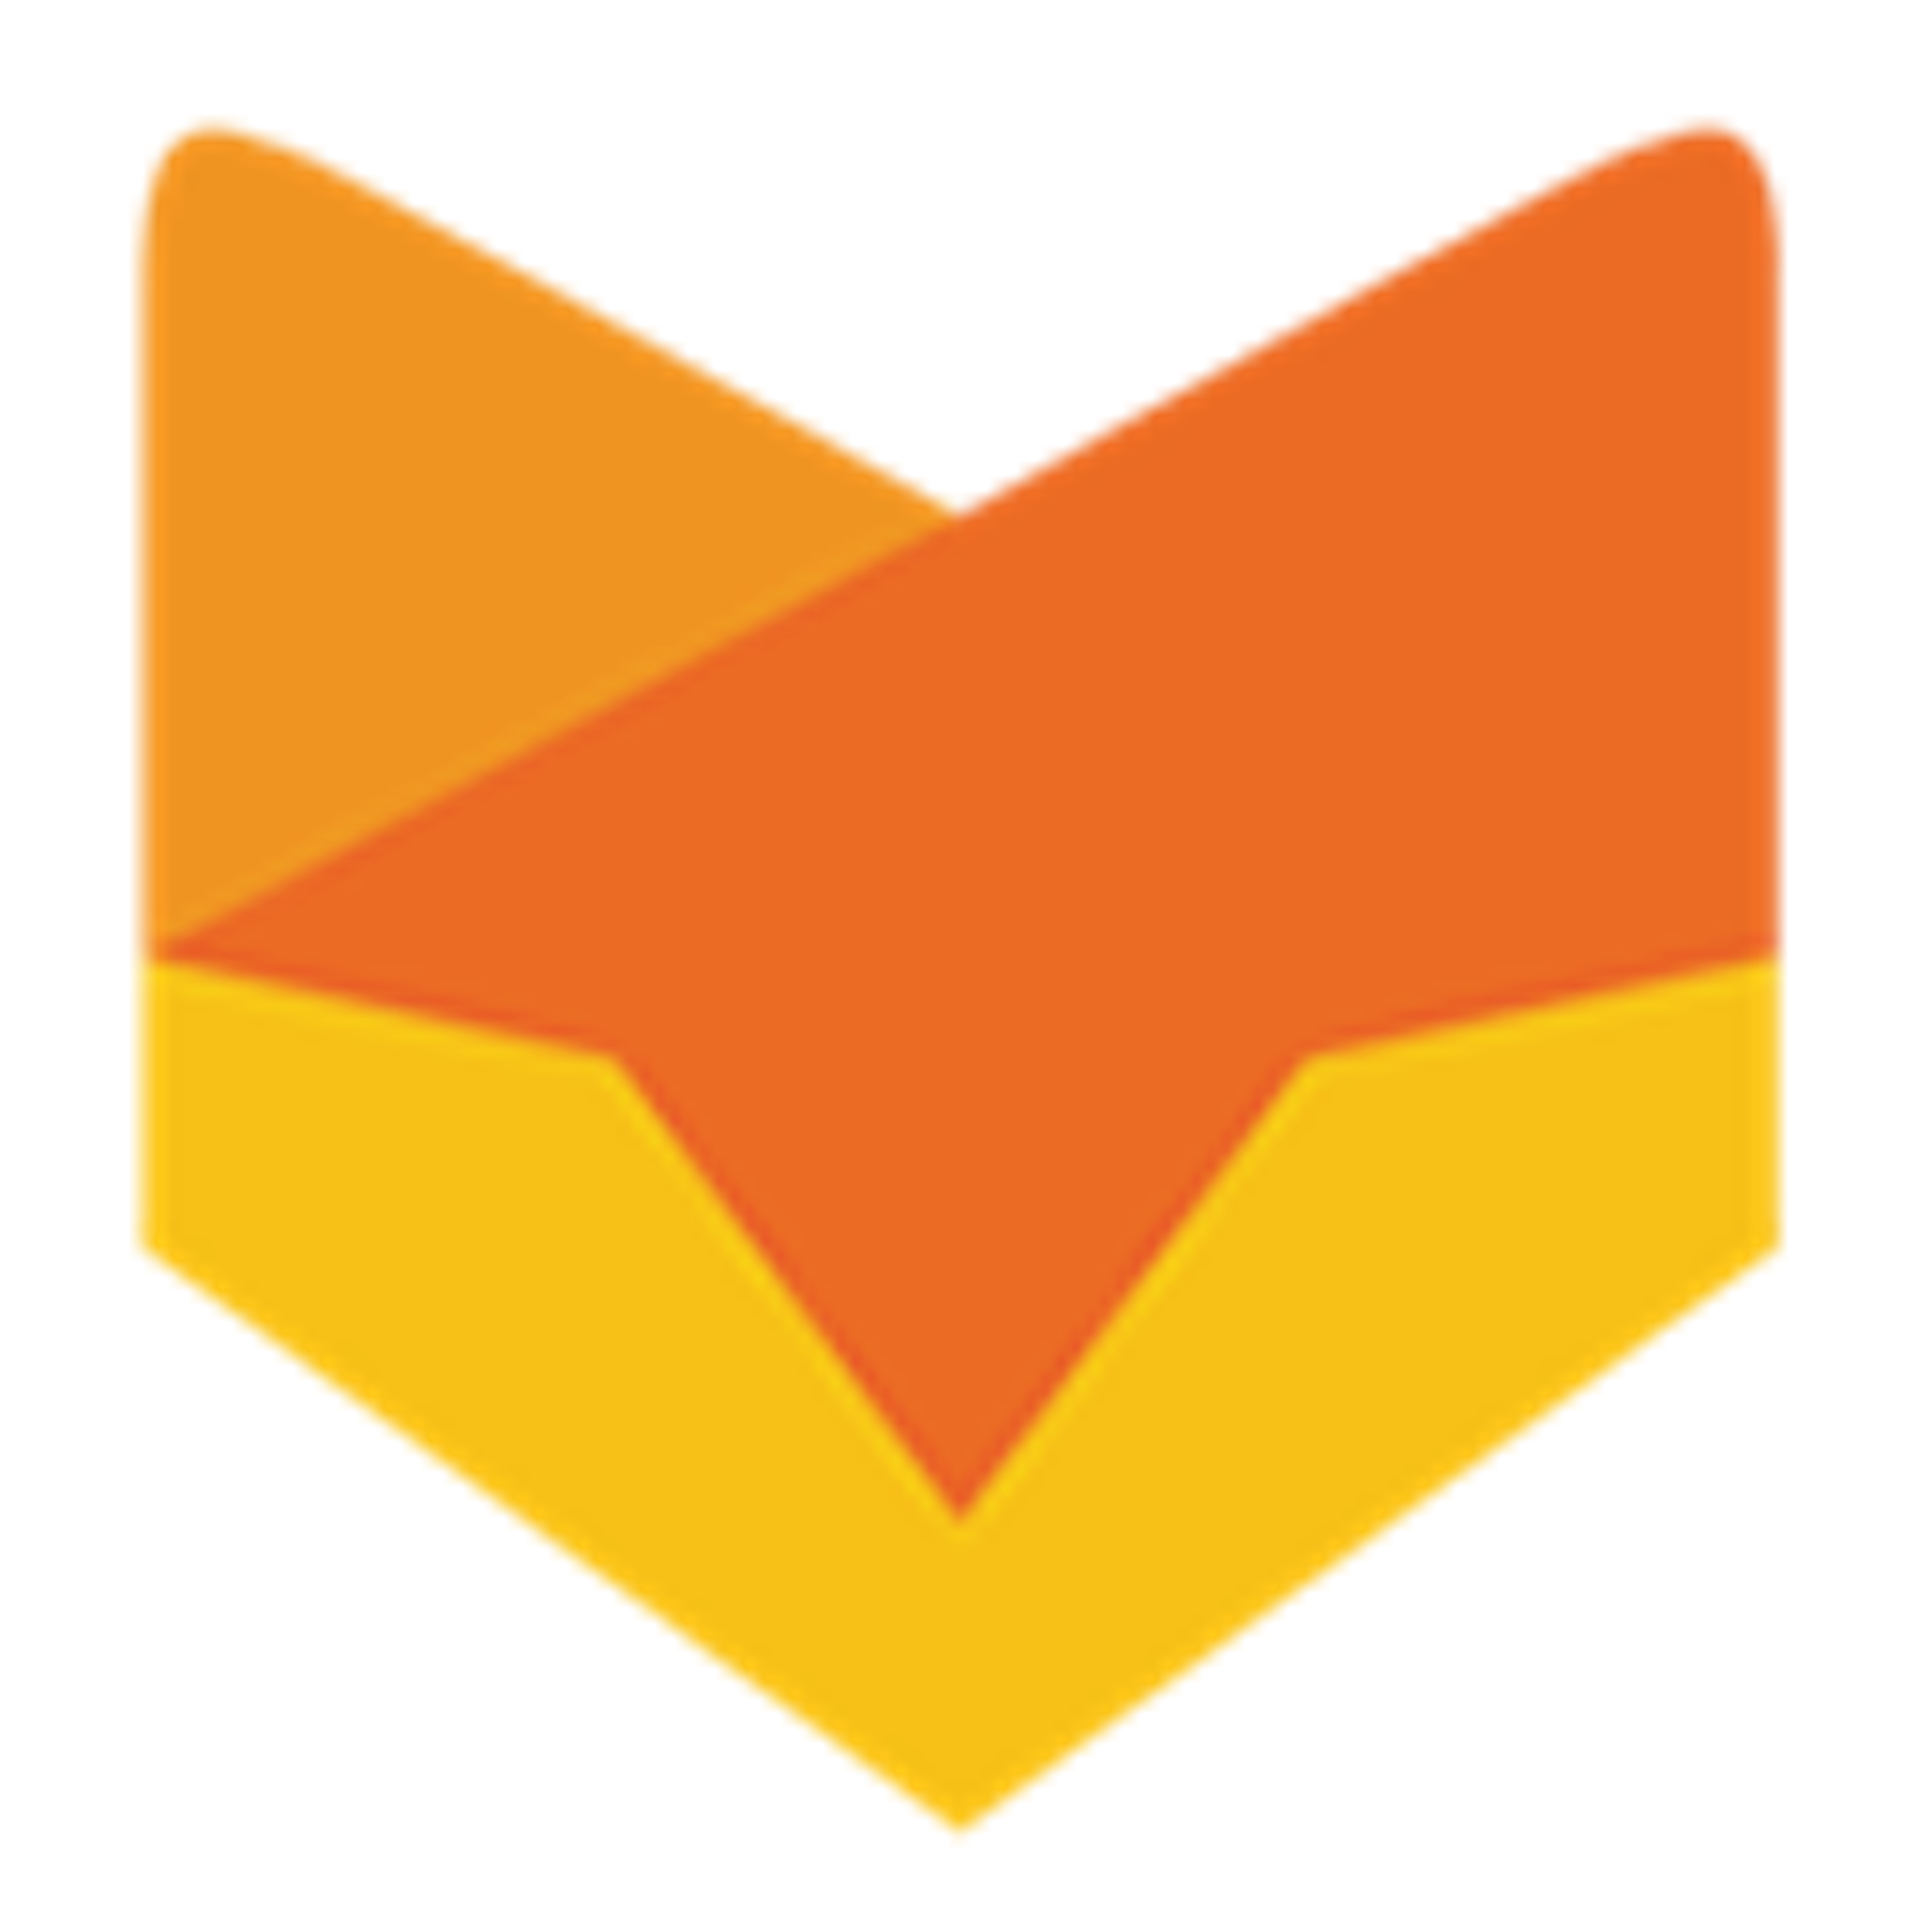 HappyFox Chat Logo